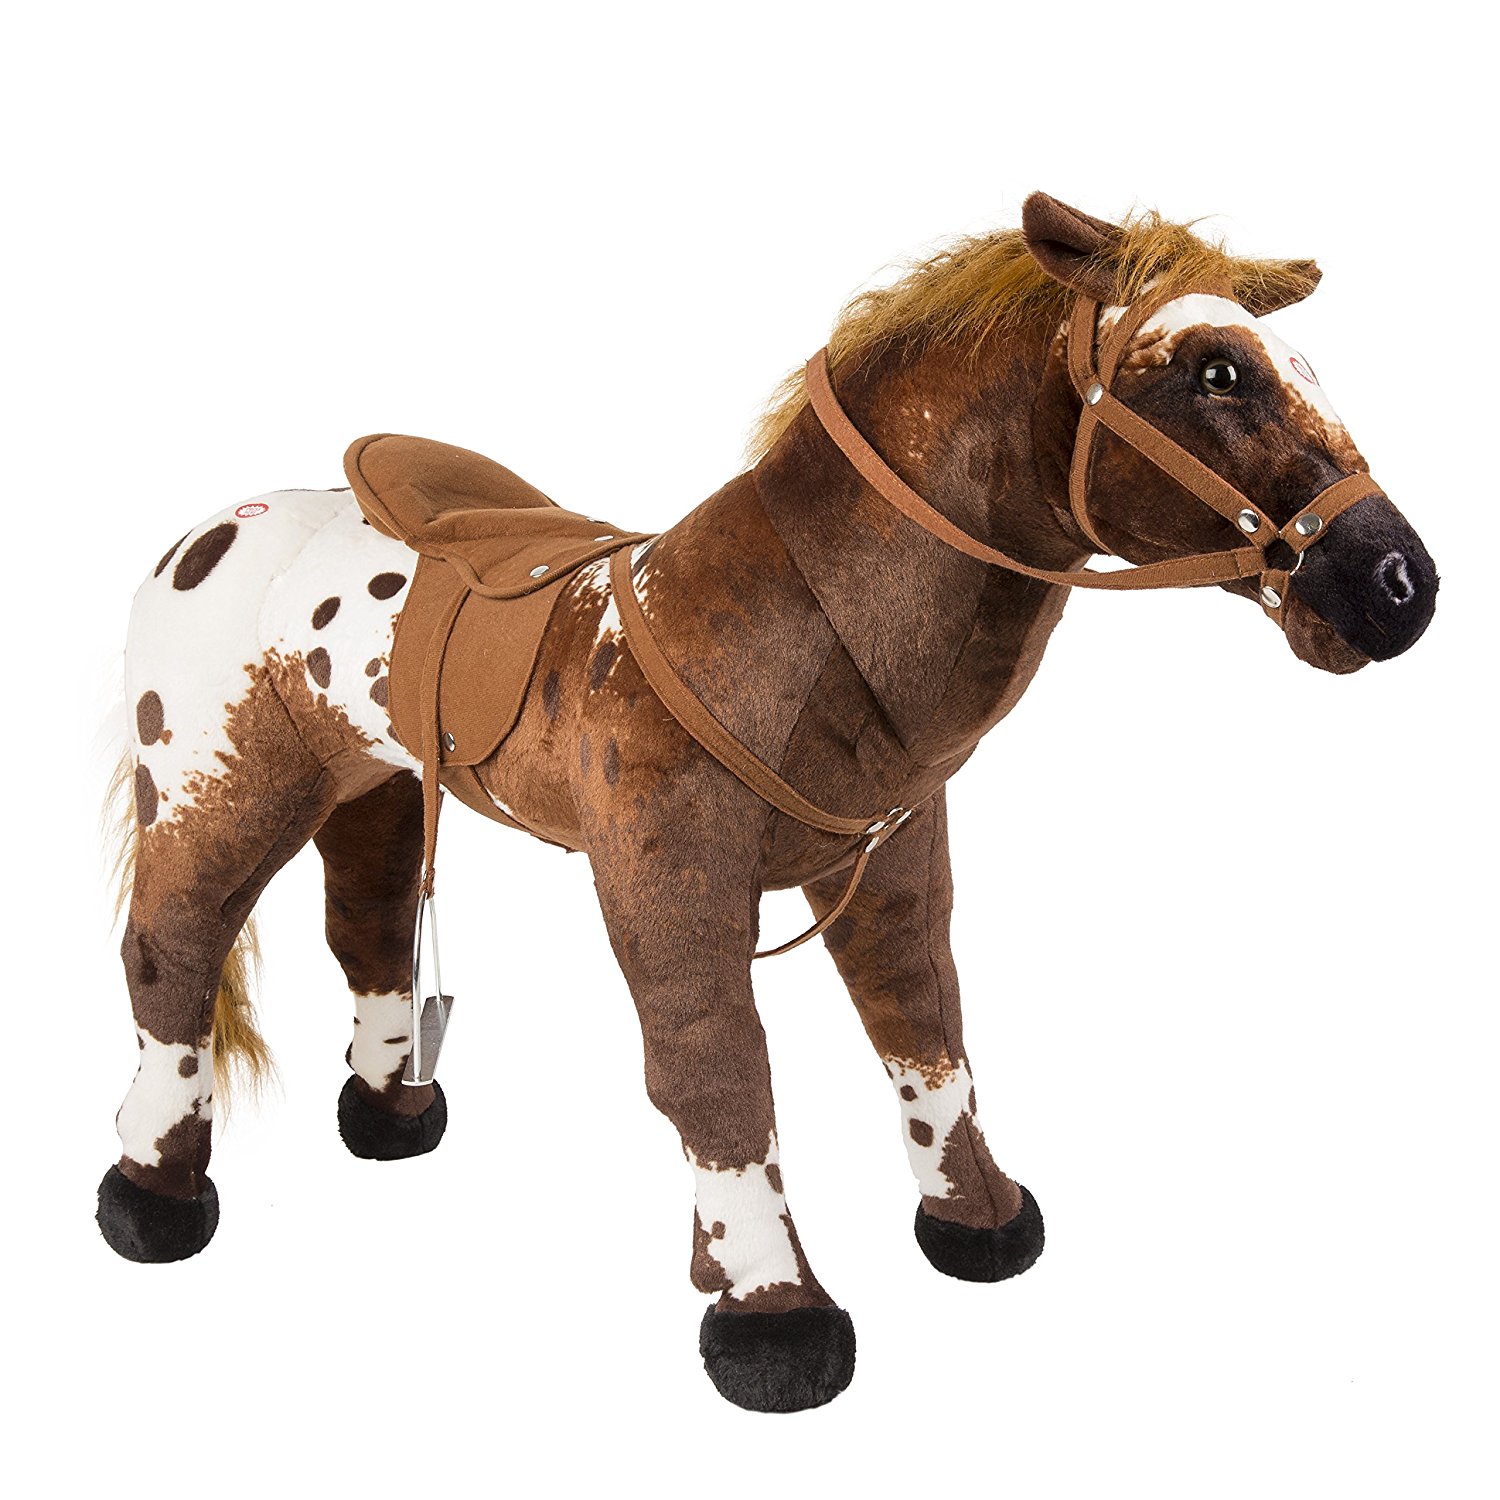 Toy horses photo